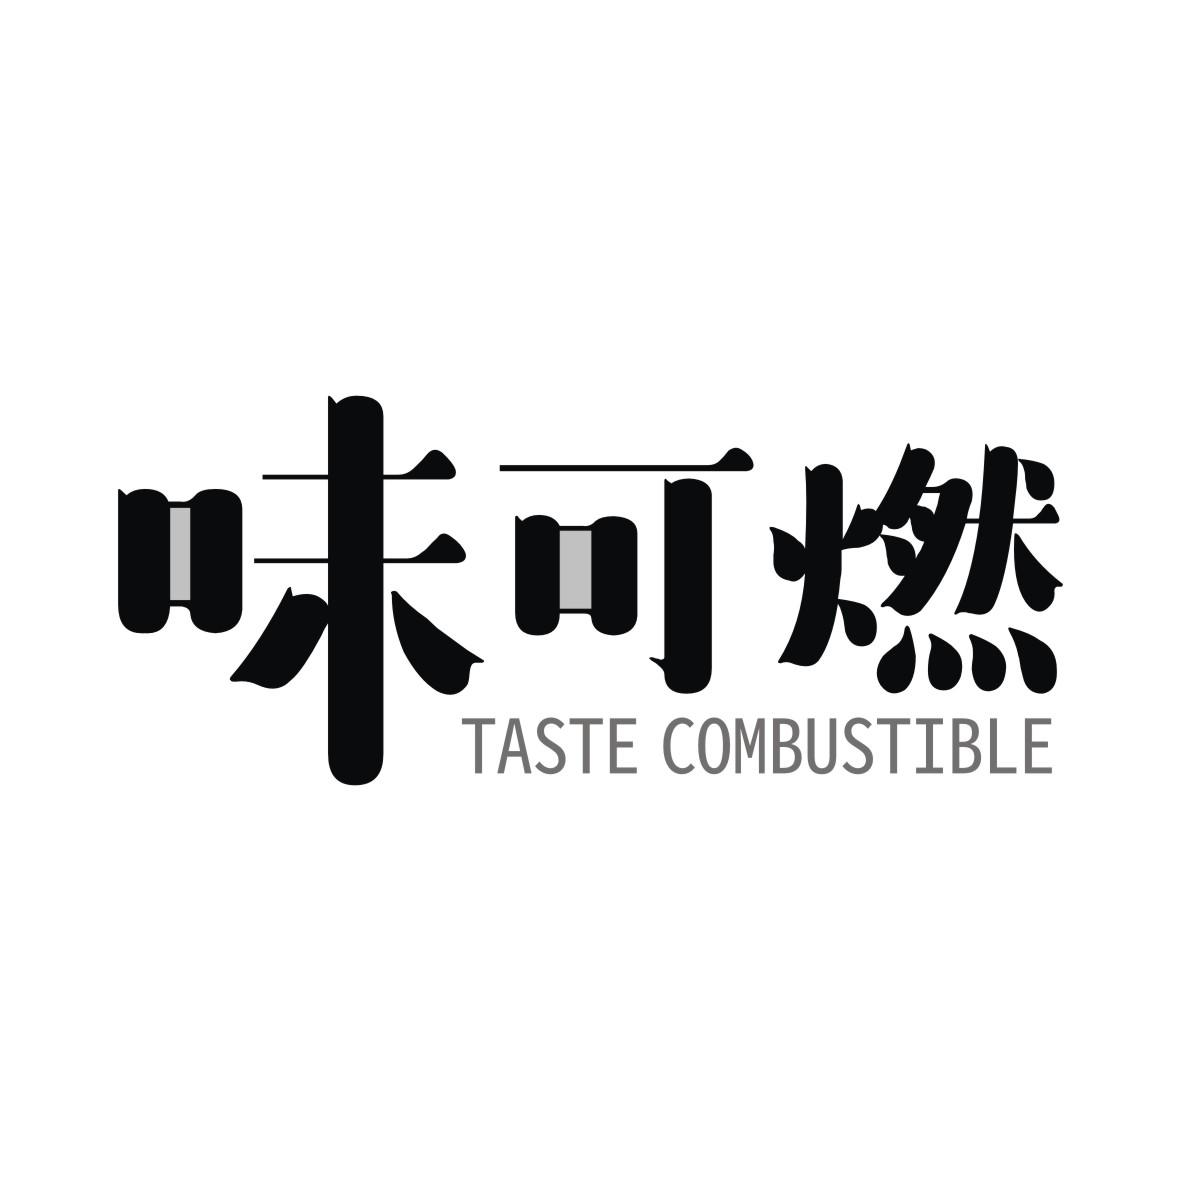 29类-食品味可燃 TASTE COMBUSTIBLE商标转让